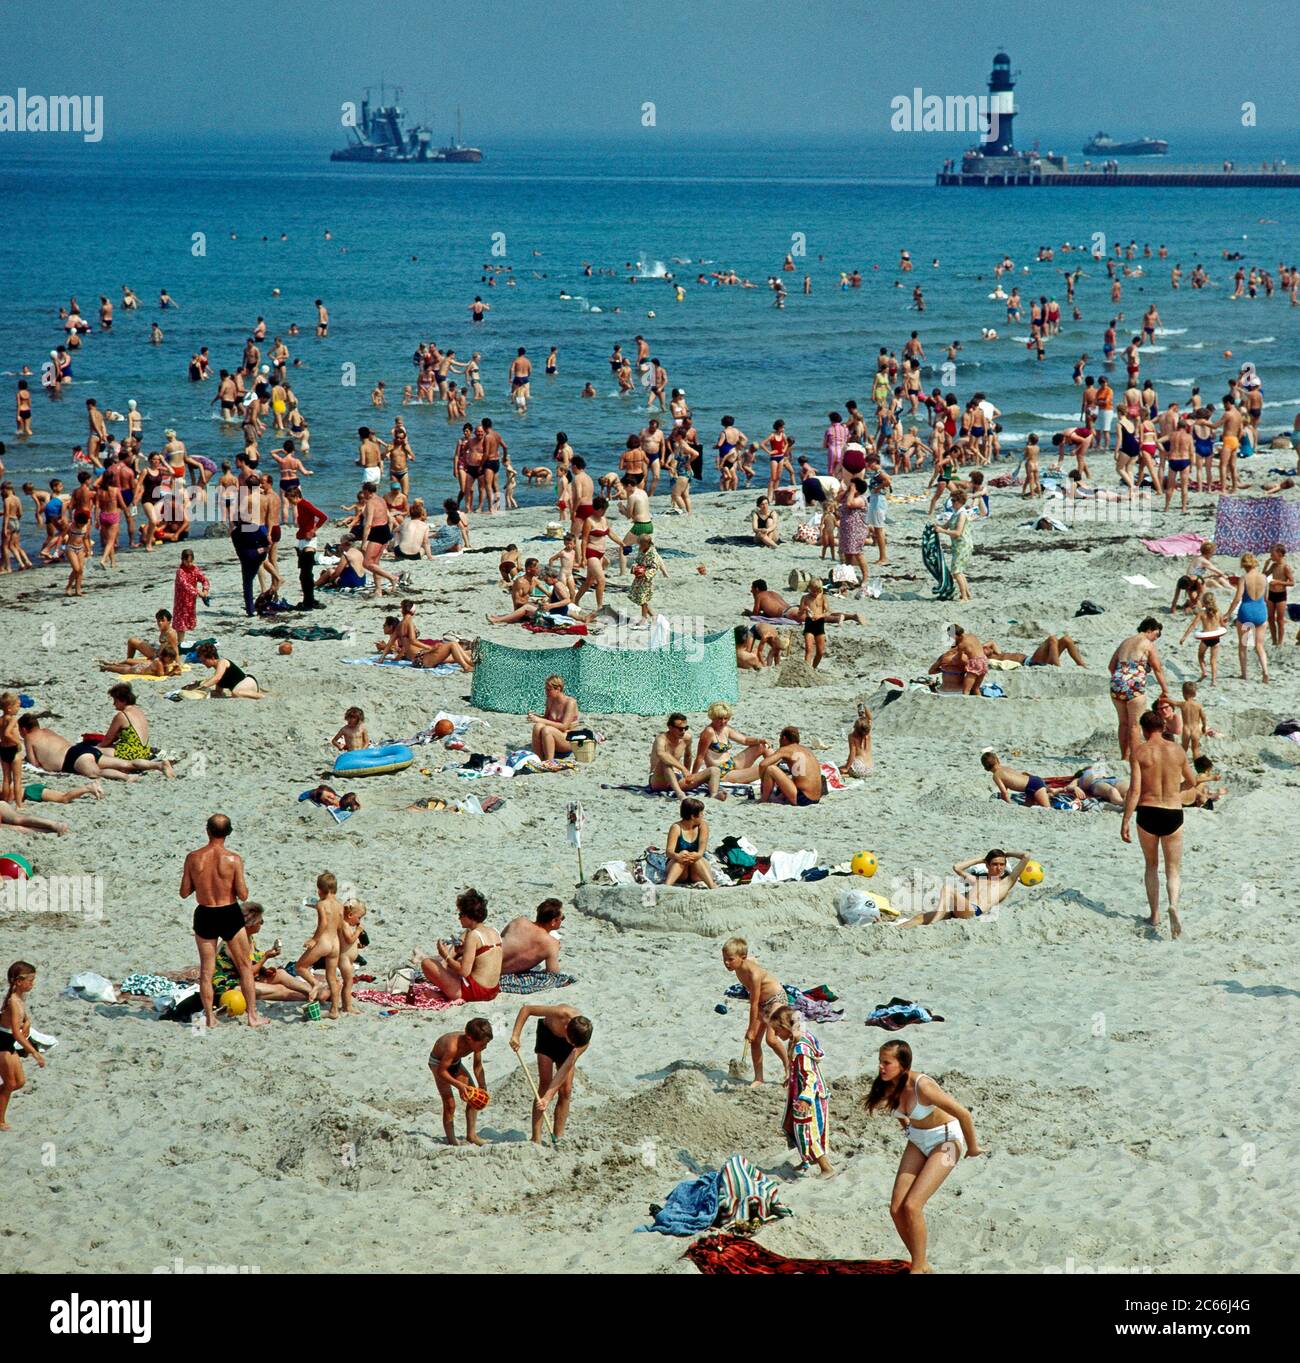 FDGB (Freier Deutscher Gewerkschaftsbund, Federazione sindacale della Germania libera) vacanzieri sulla spiaggia sabbiosa di Warnemünde, località balneare sul Mar Baltico, GDR Foto Stock